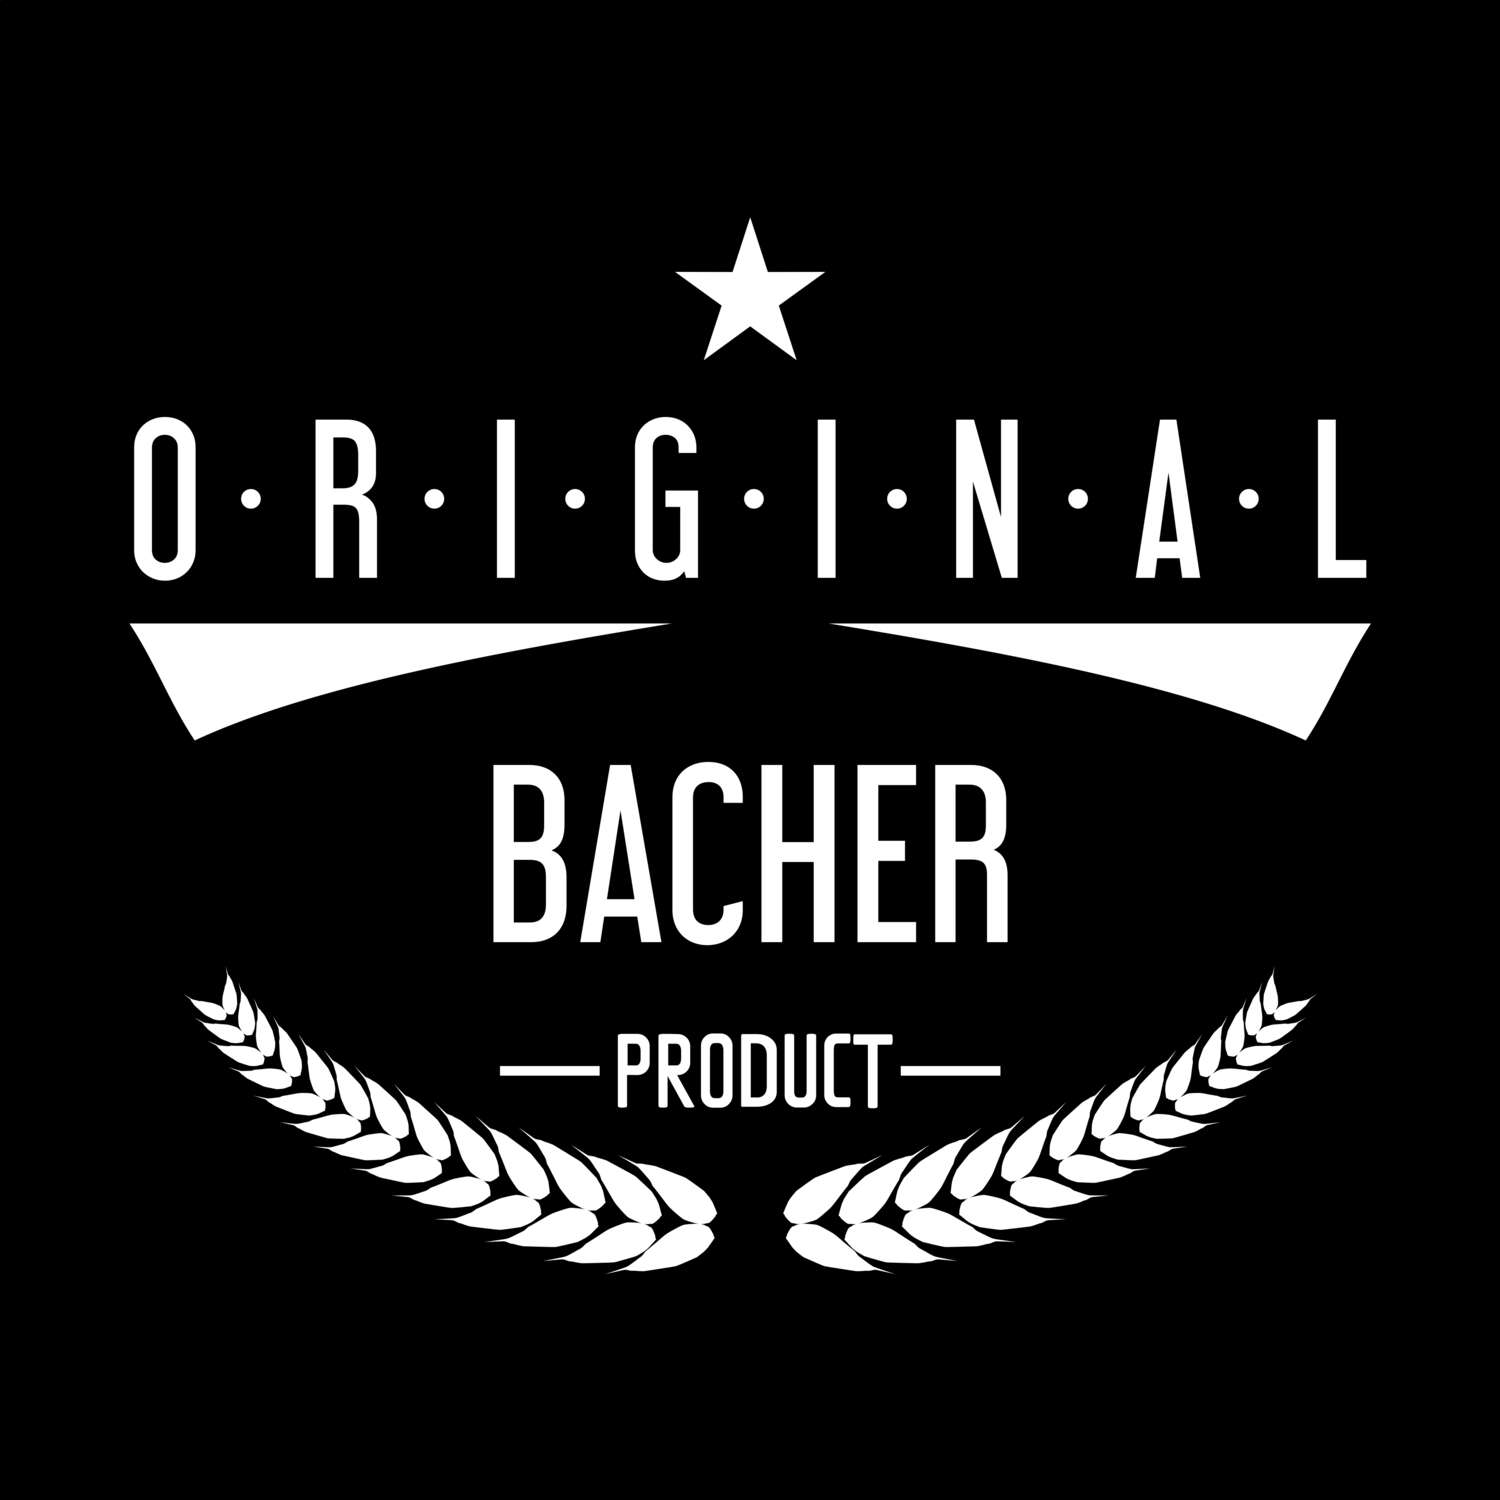 Bacher T-Shirt »Original Product«